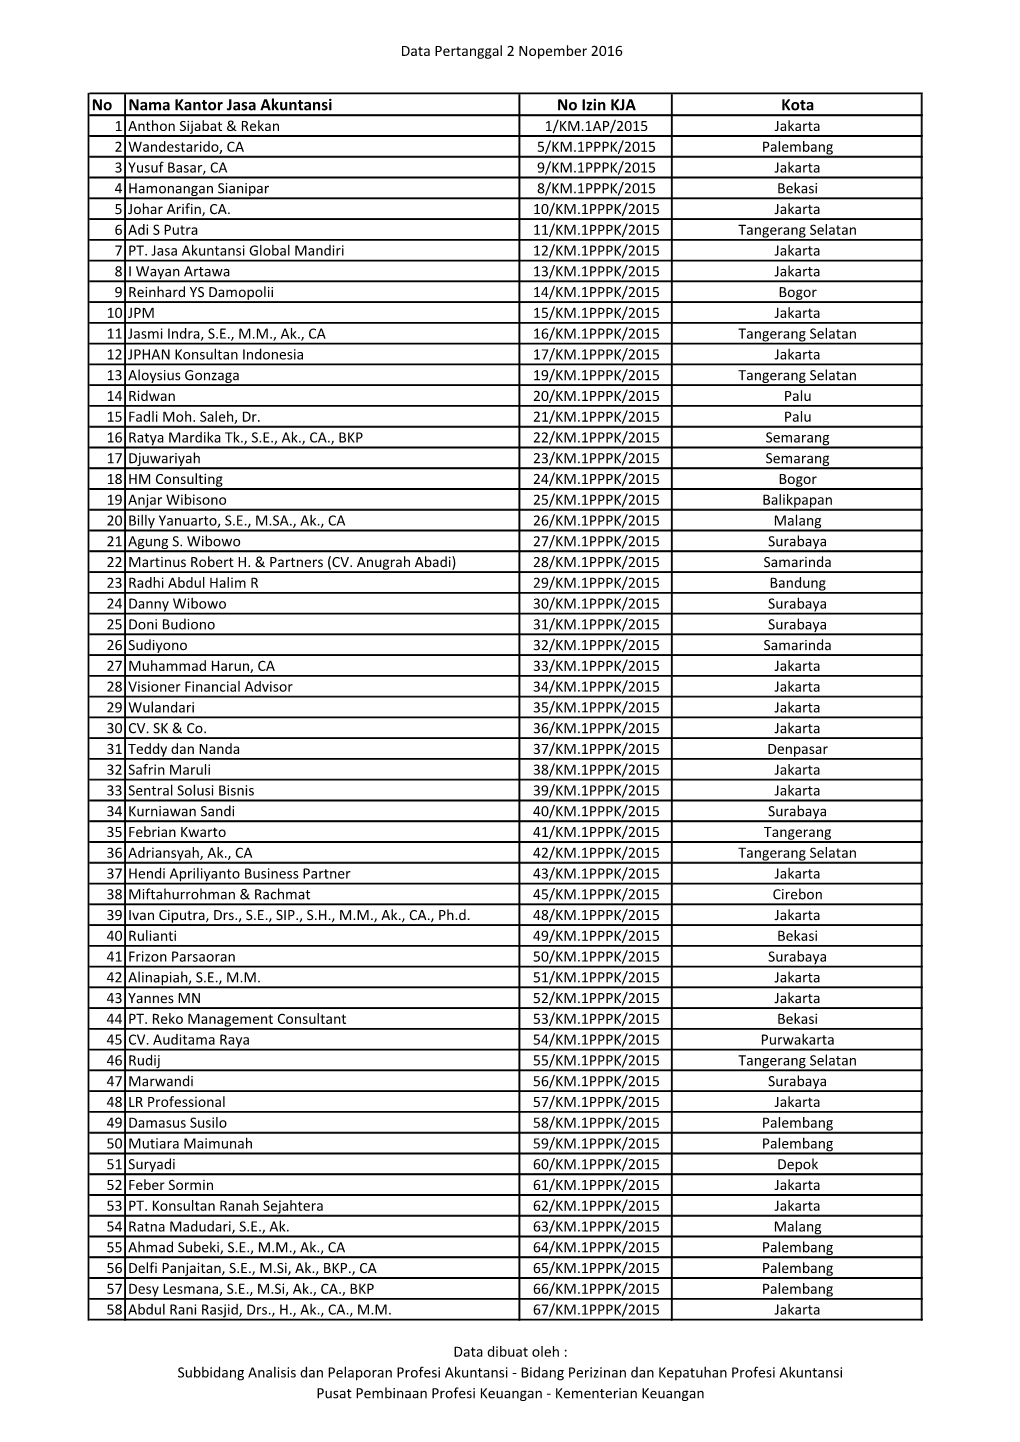 Daftar Kantor Jasa Akuntan (KJA)